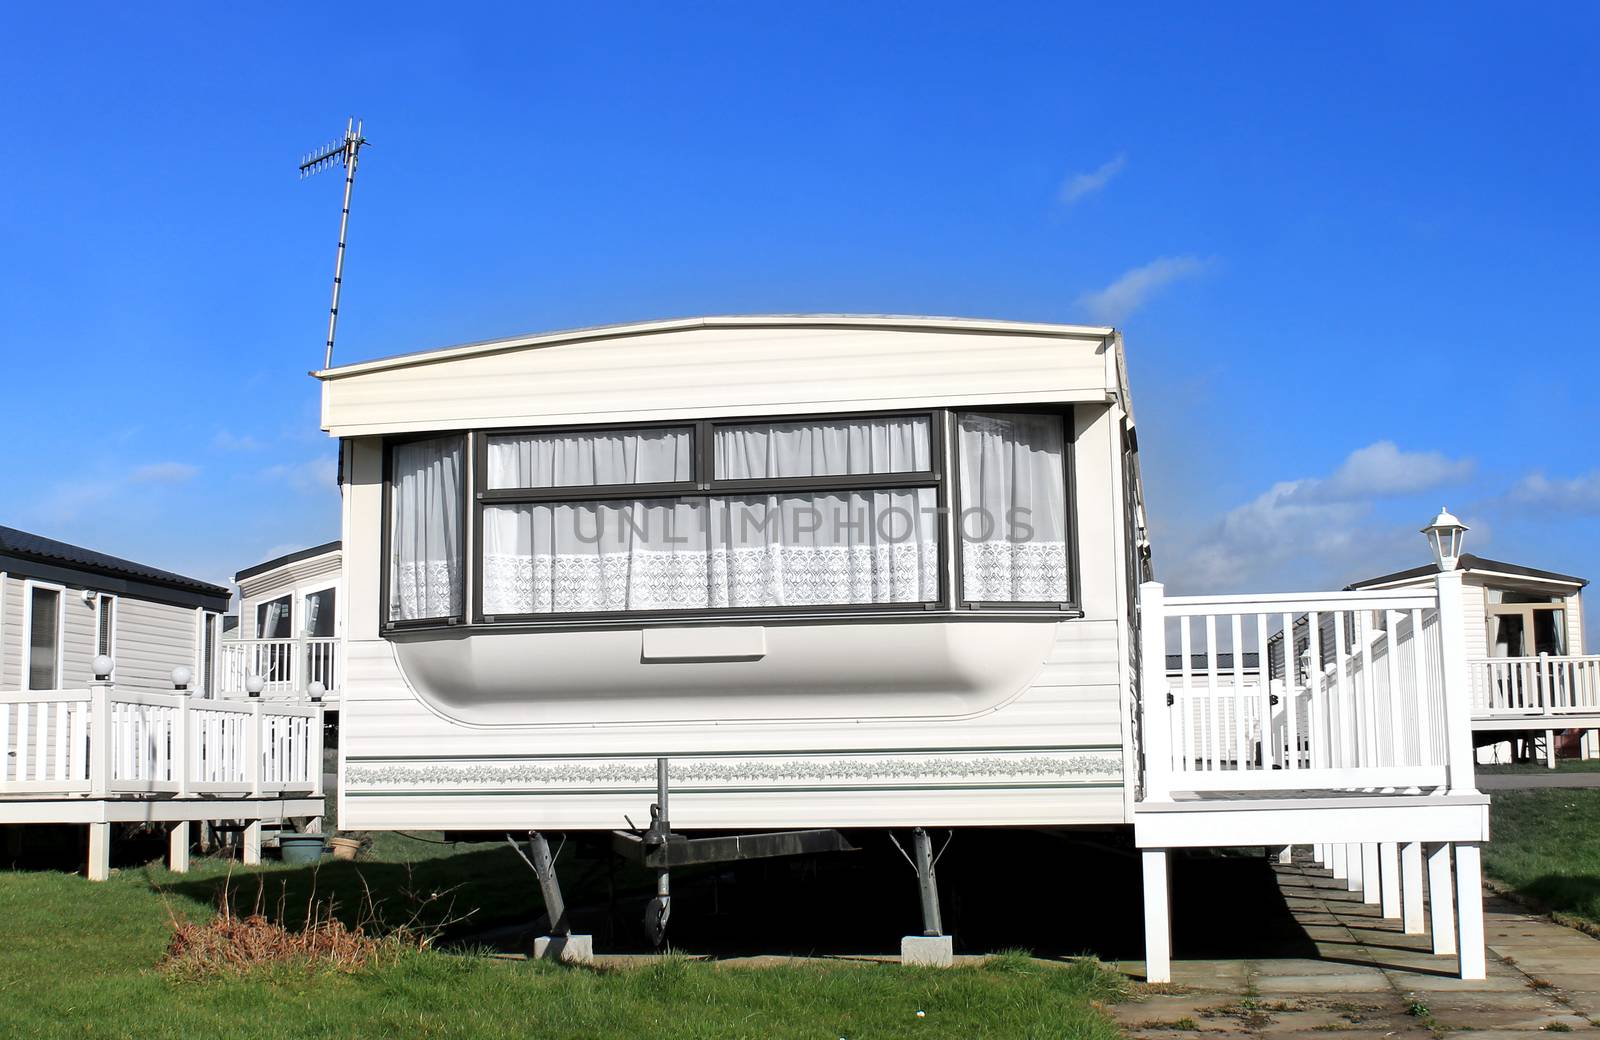 Exterior of luxurious caravans in a trailer park, Scarborough, England.